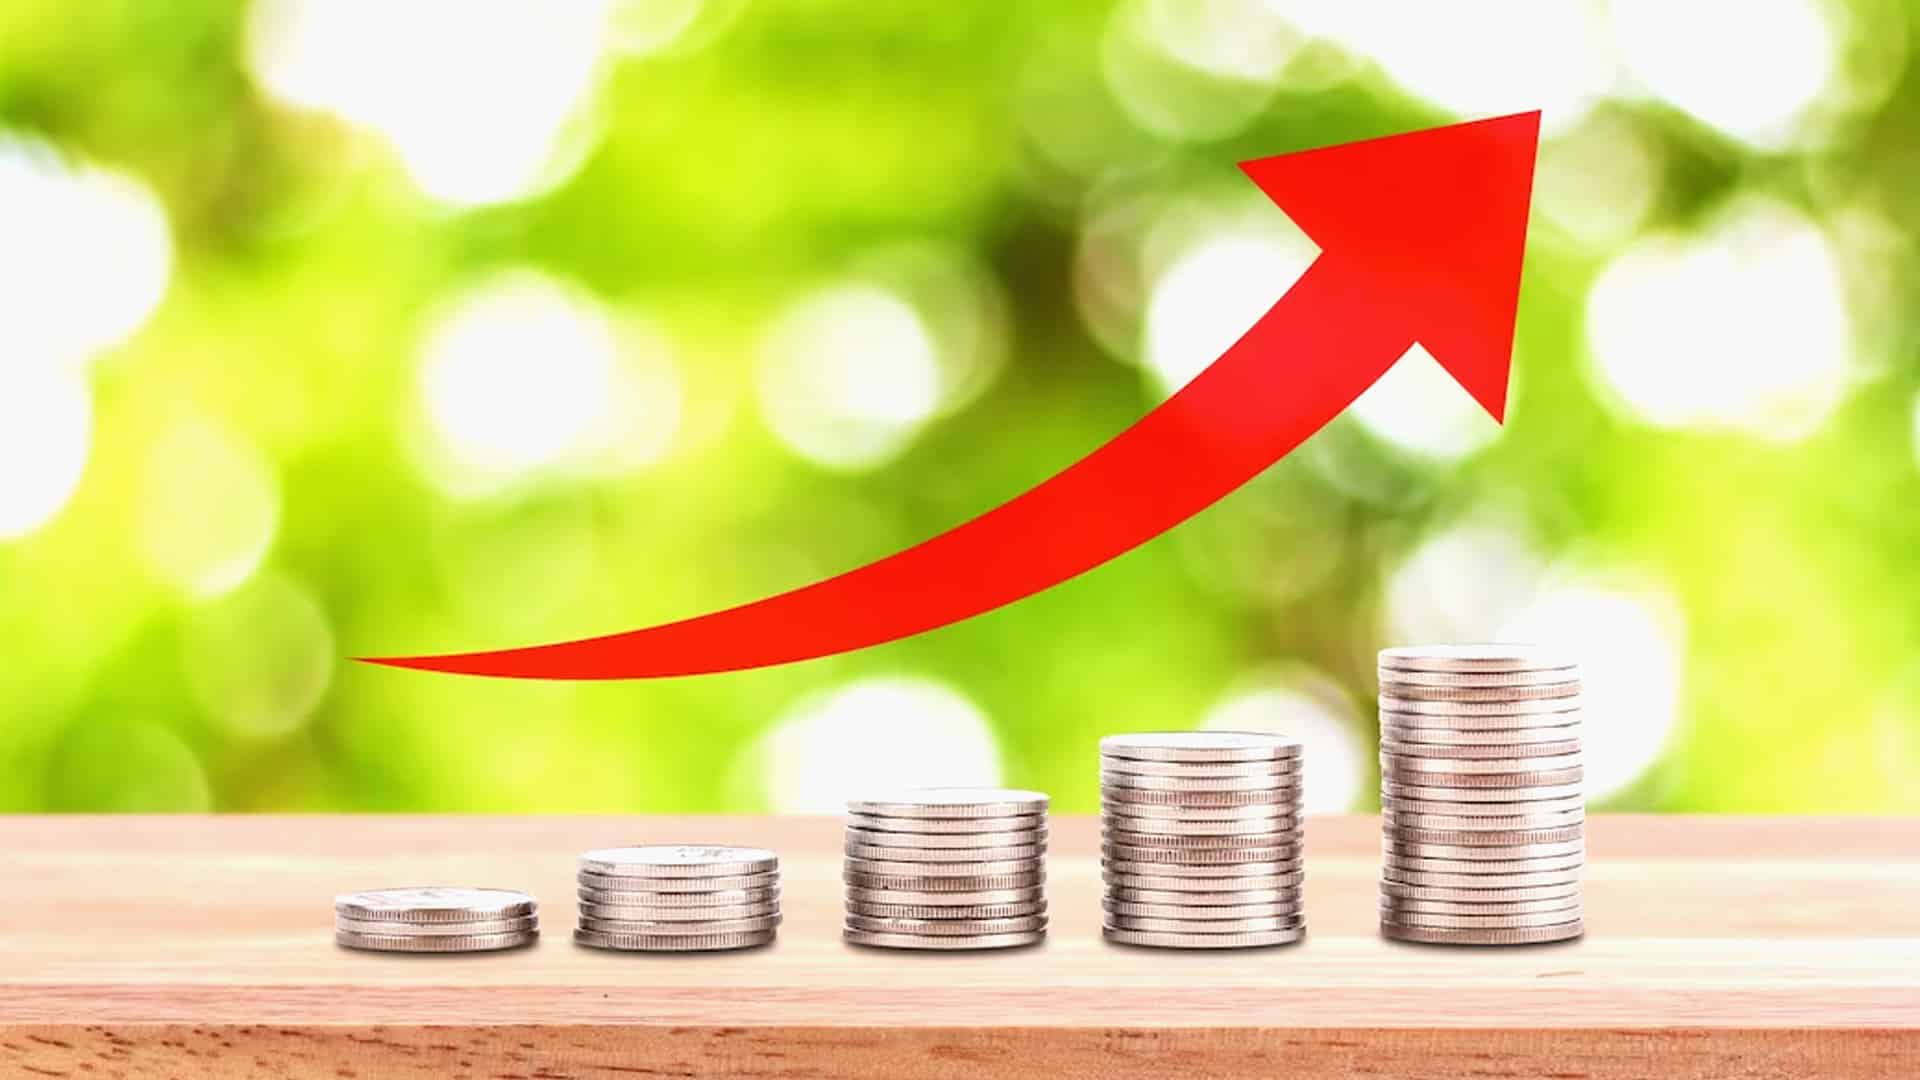 Edelweiss Financial board clears Rs 1,500 crore fund raising via NCD